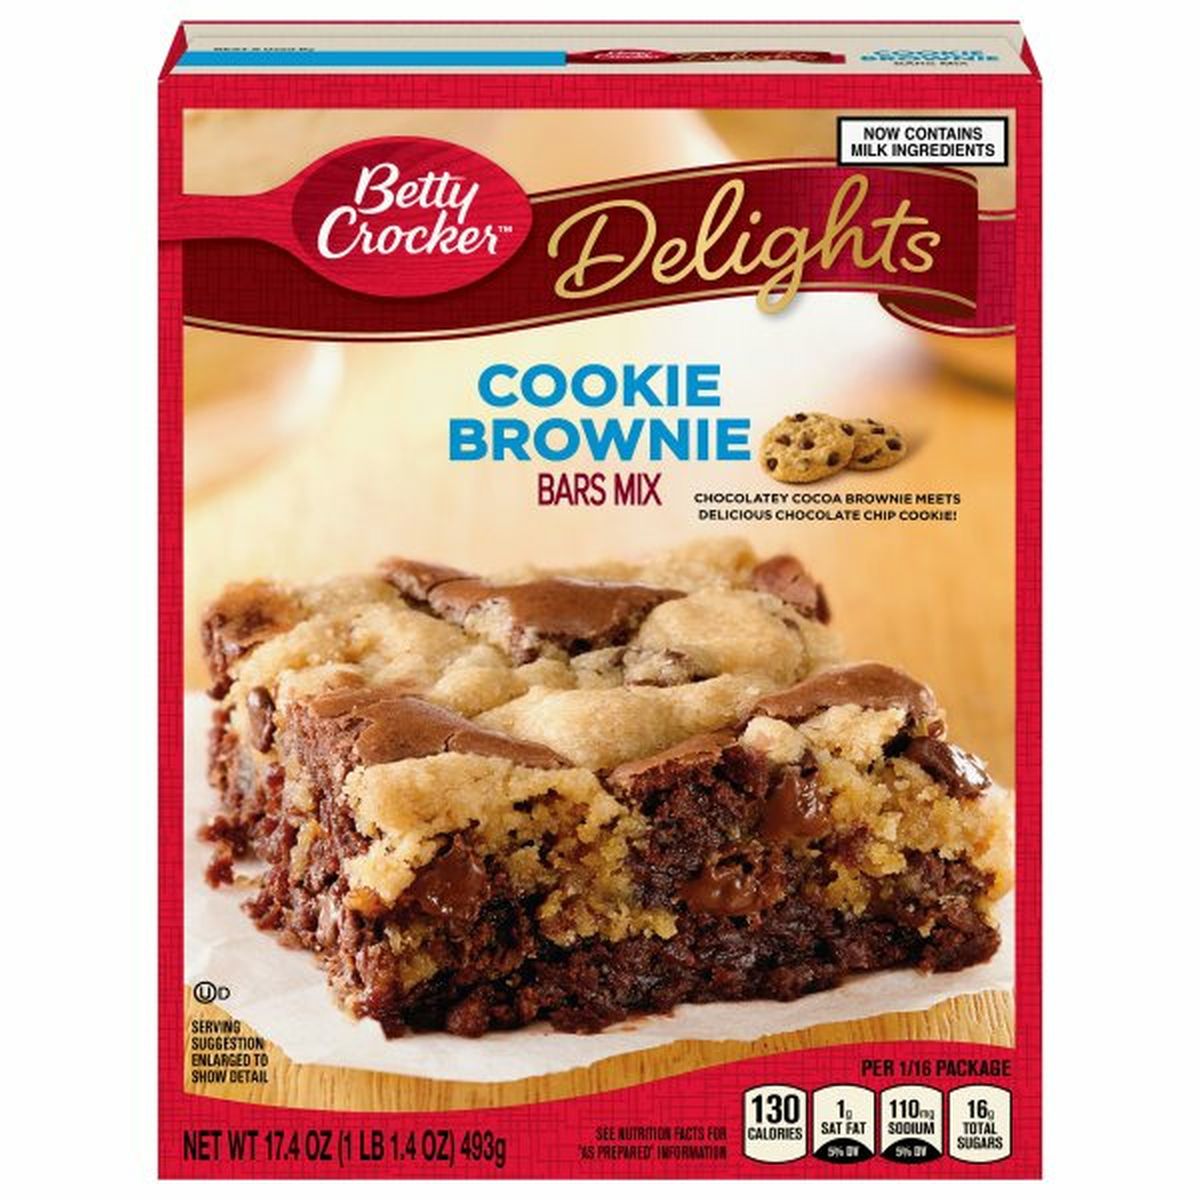 Calories in Betty Crocker Delights Bars Mix, Cookie Brownie